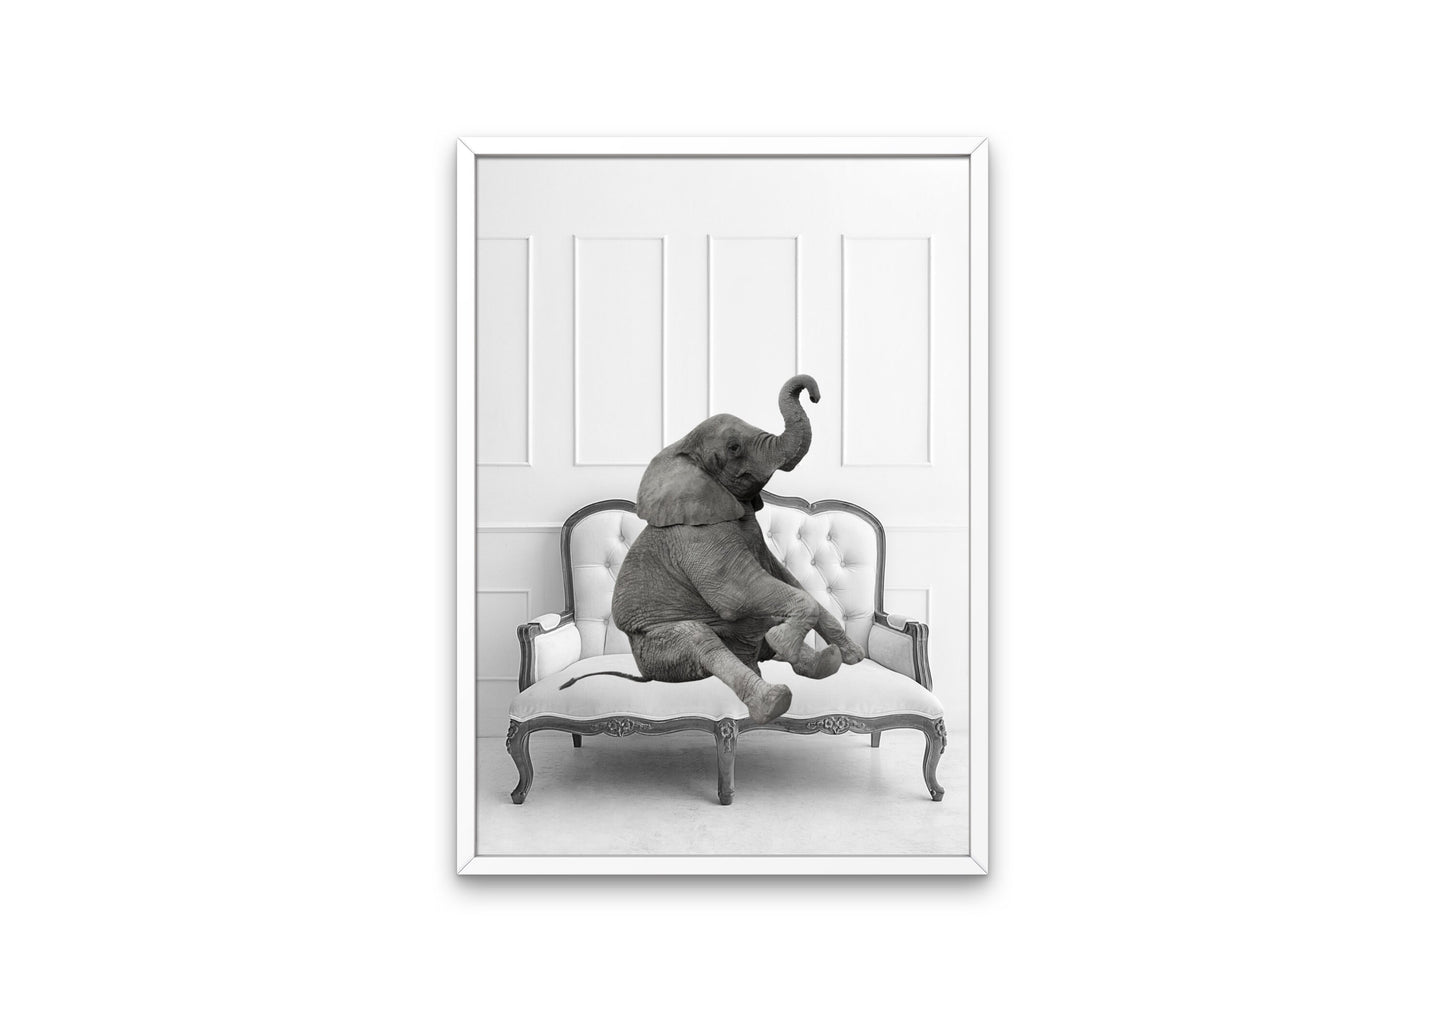 Black and White Elephant on Couch DIGITAL PRINT, black & white decor, safari animal décor, elephant poster, glam wall art, elephant lover